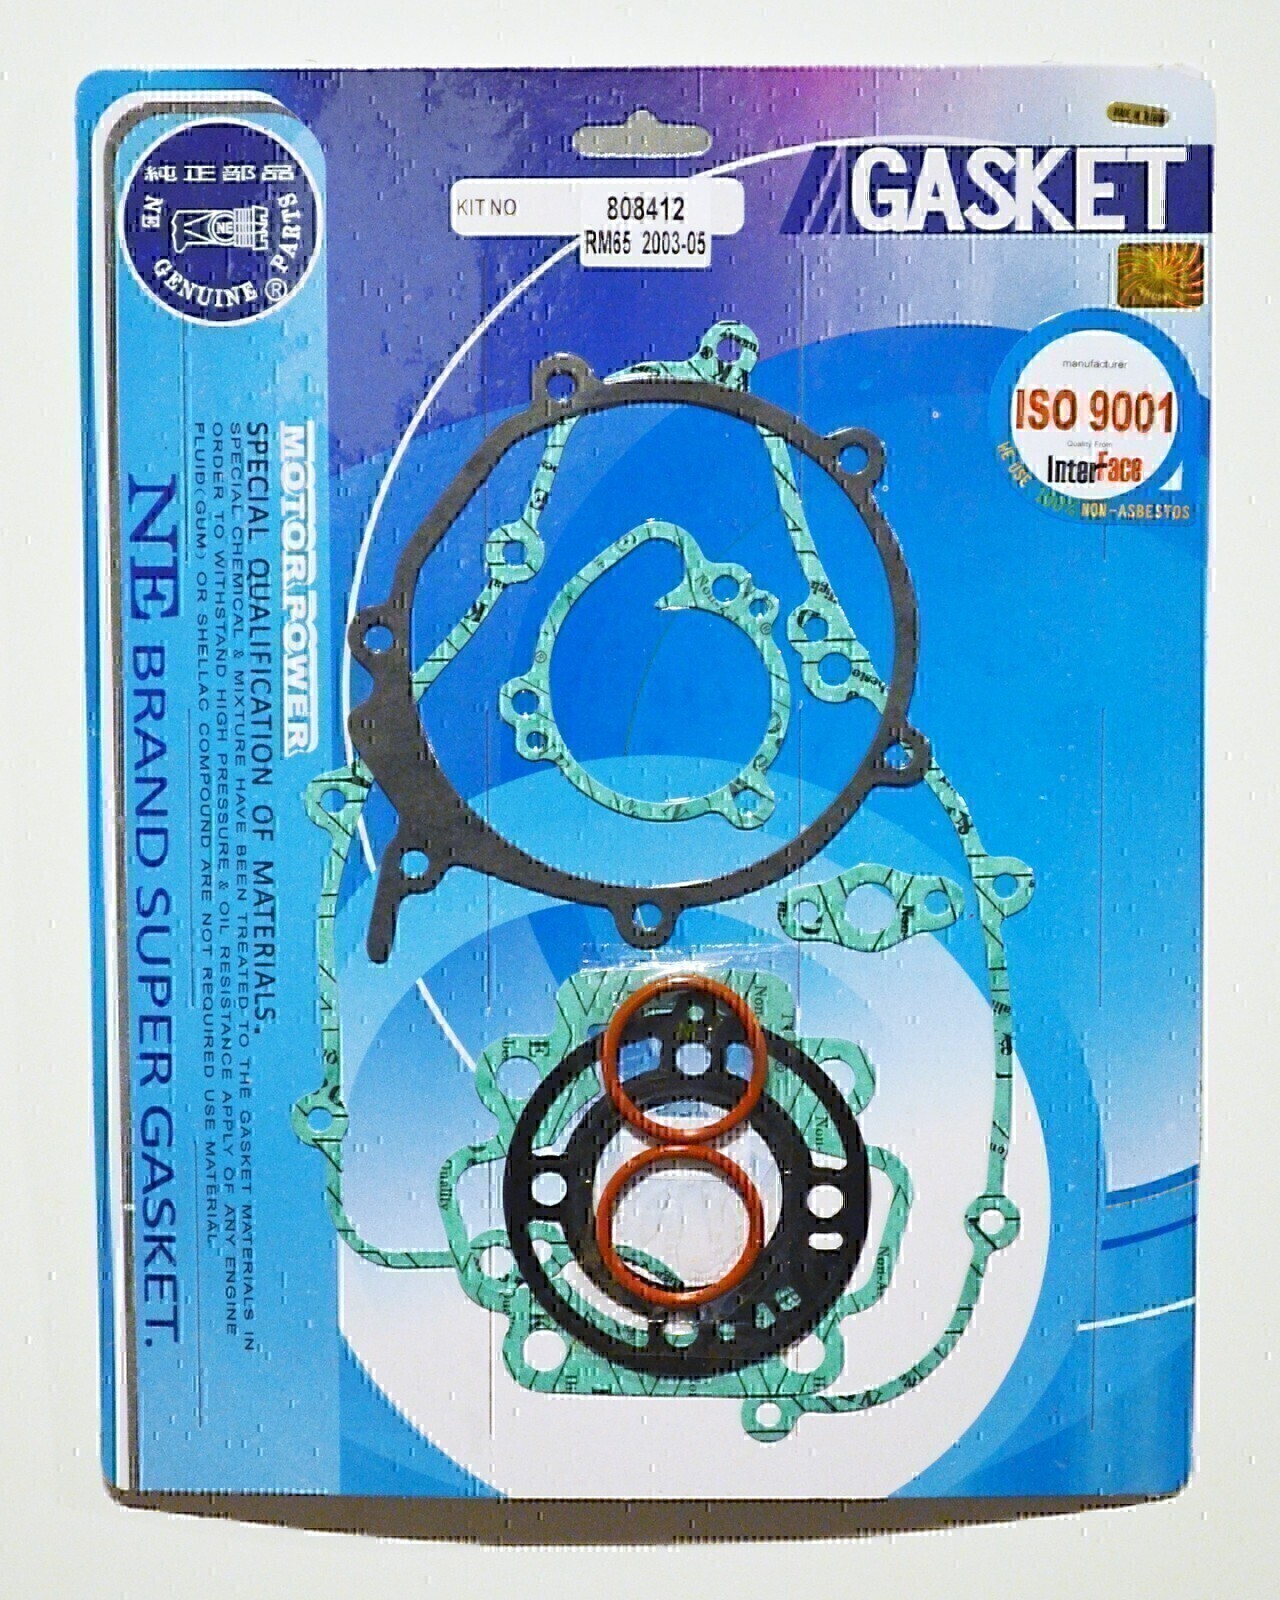 COMPLETE GASKET KIT FOR SUZUKI RM65 2003 - 2005 KAWASAKI KX65 2000 - 2020